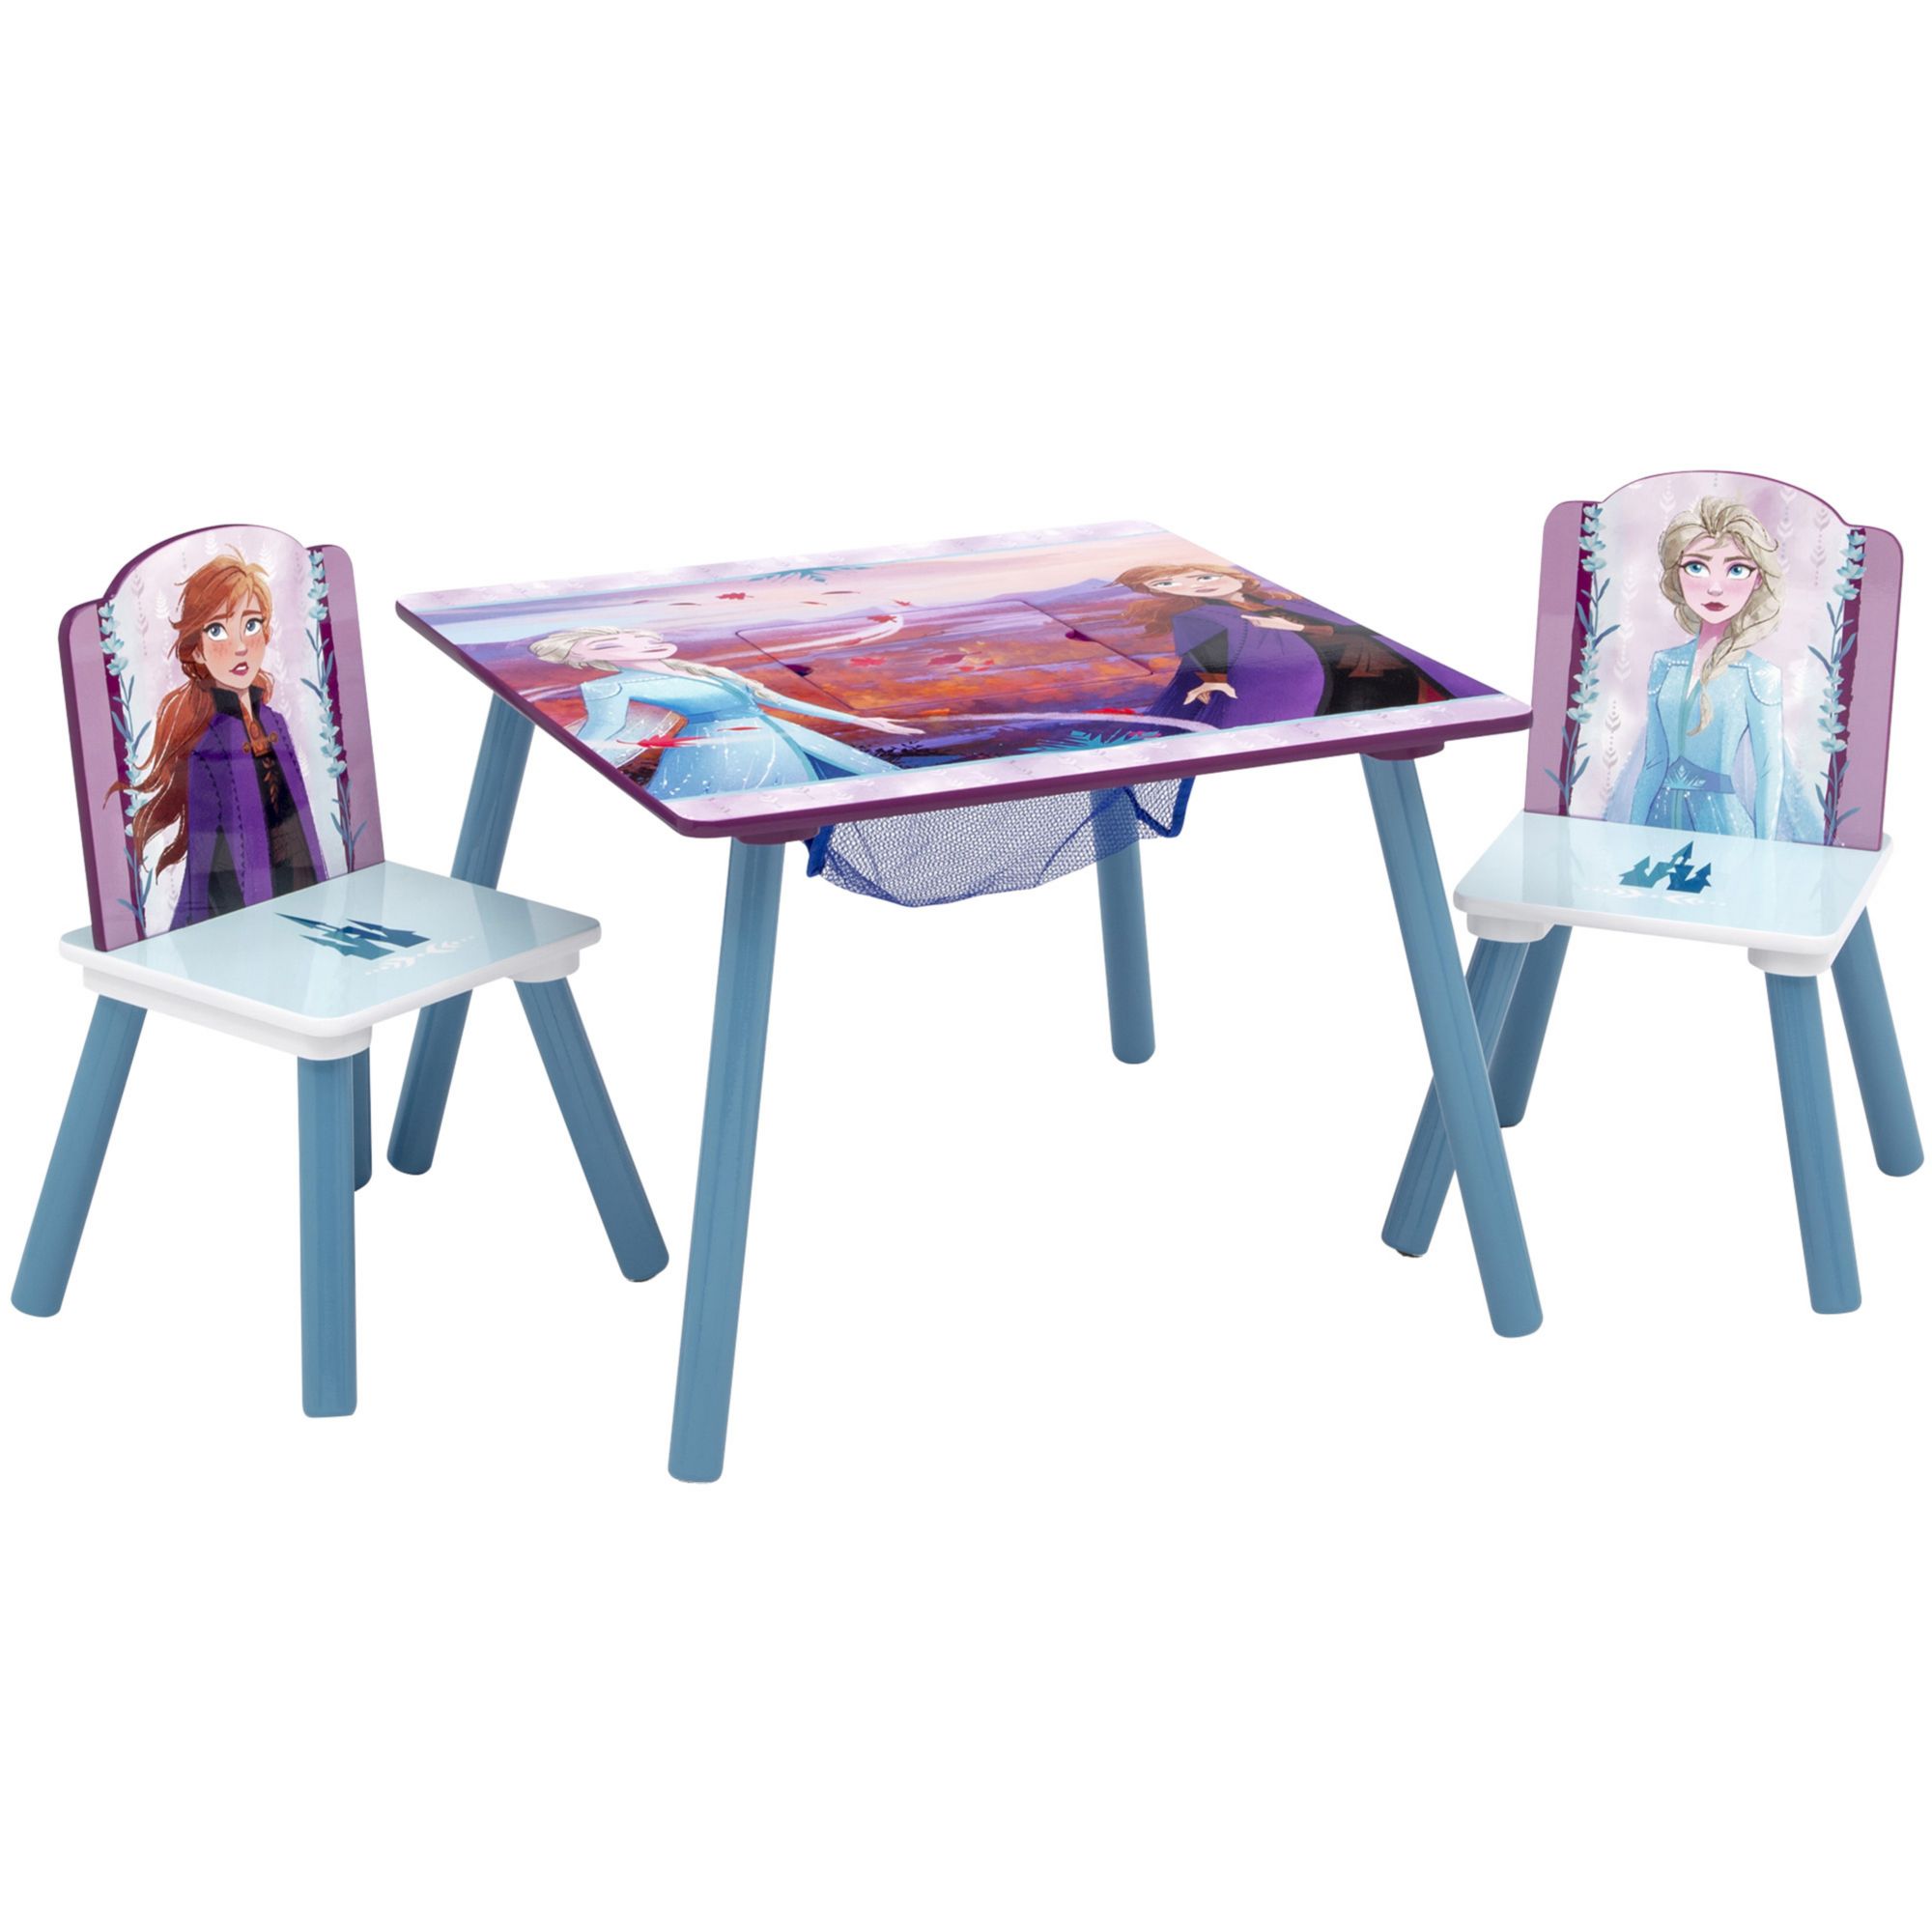 sesame street metal folding table & chair set